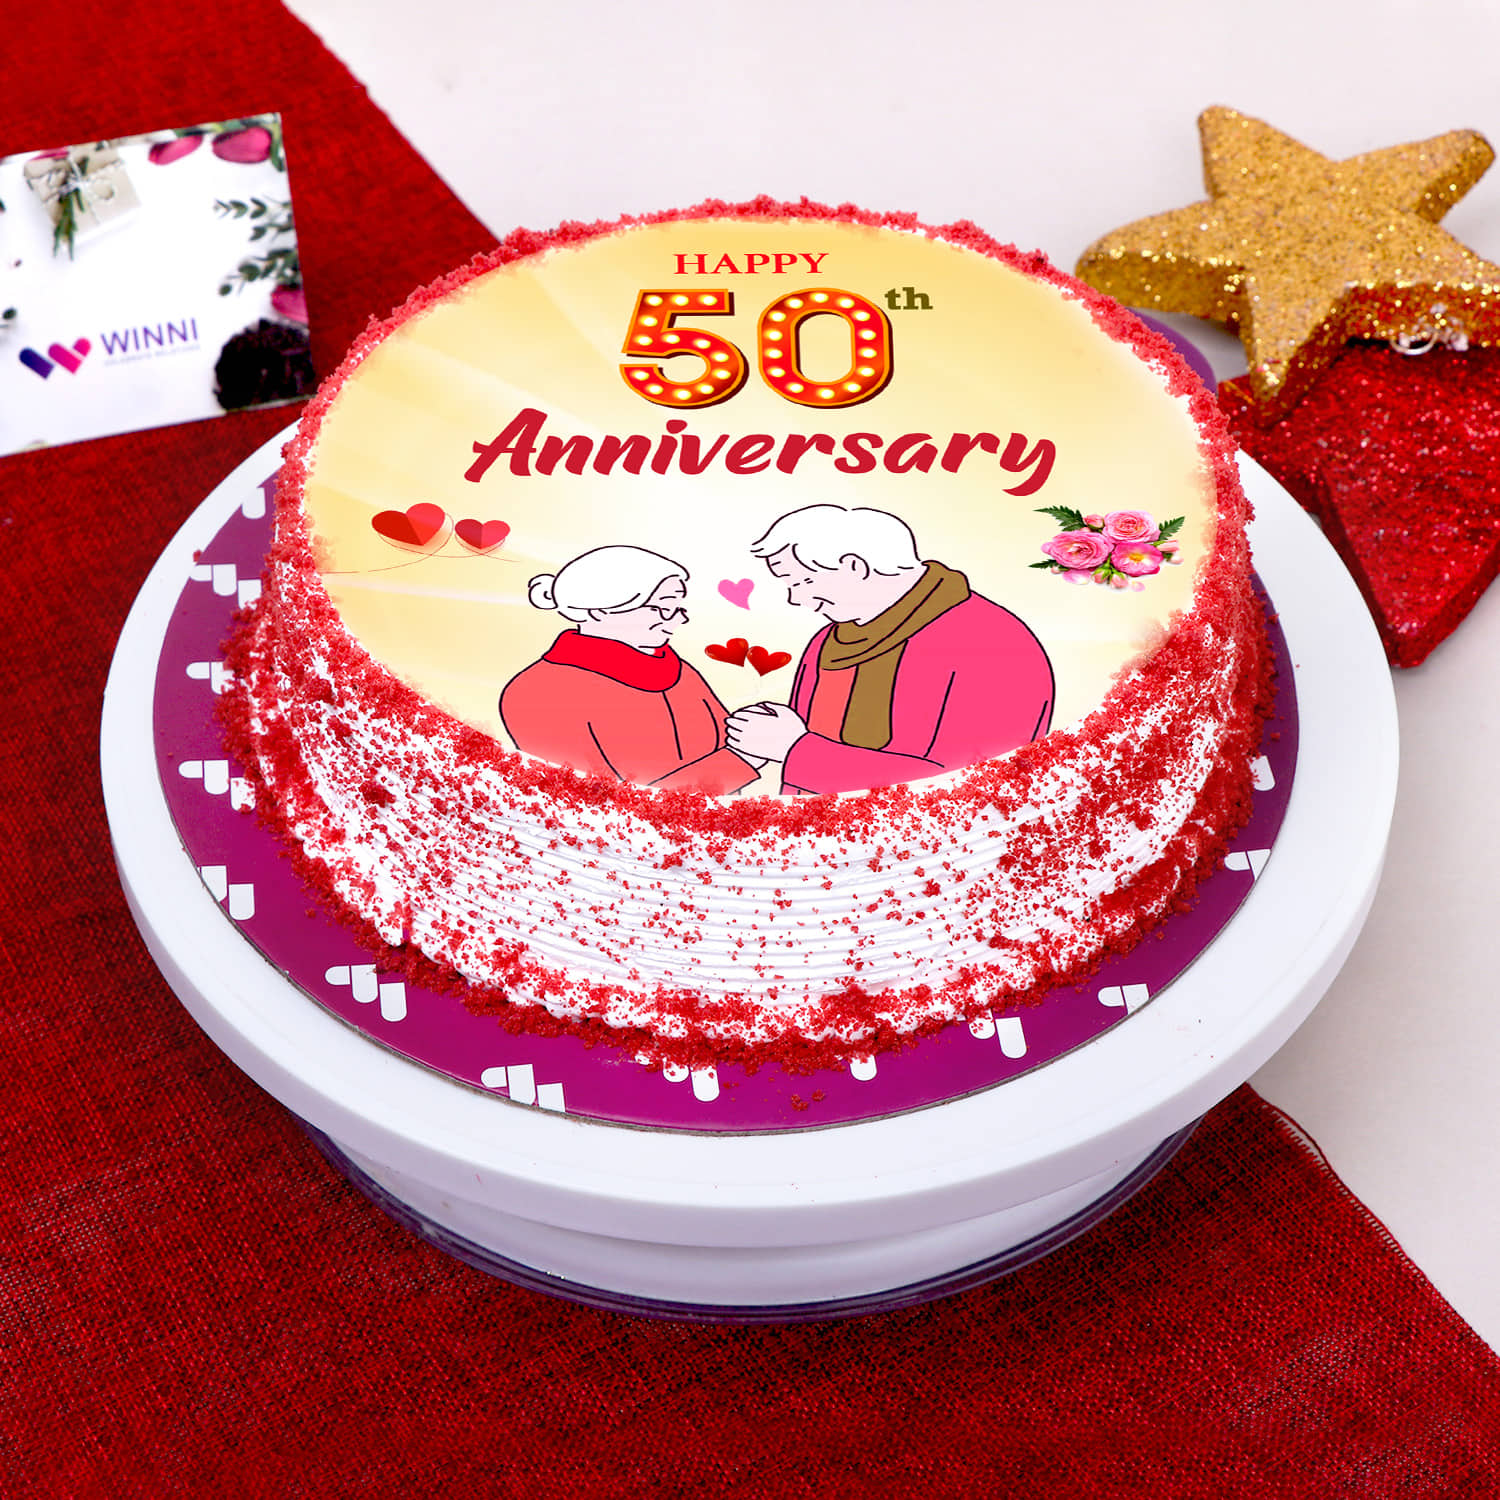 50th birthday star cake